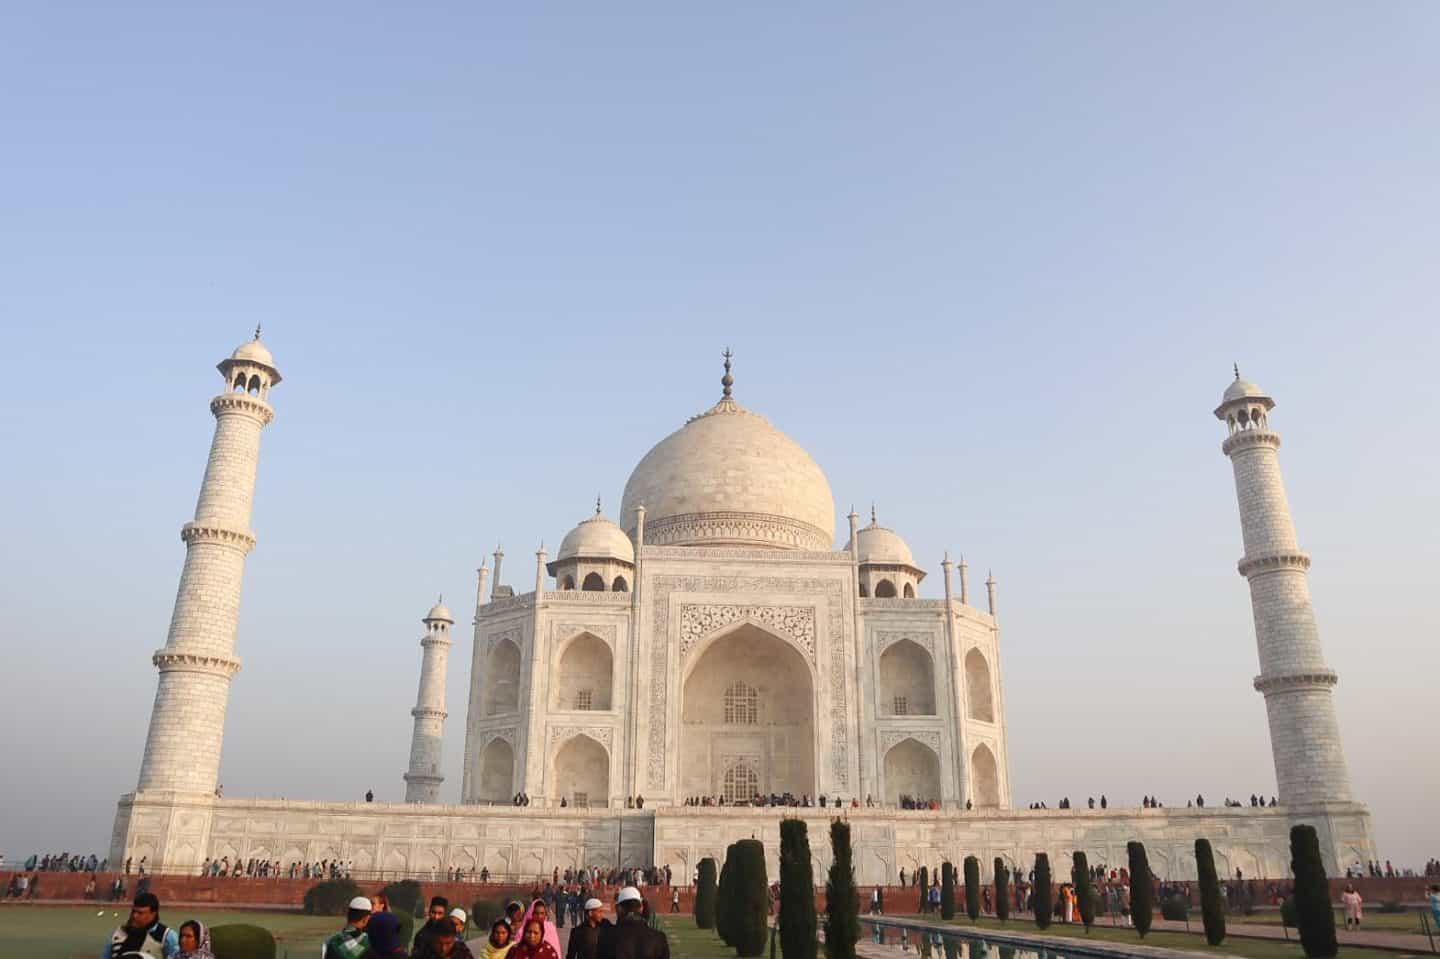 Agra Taj Mahal Travel Guide